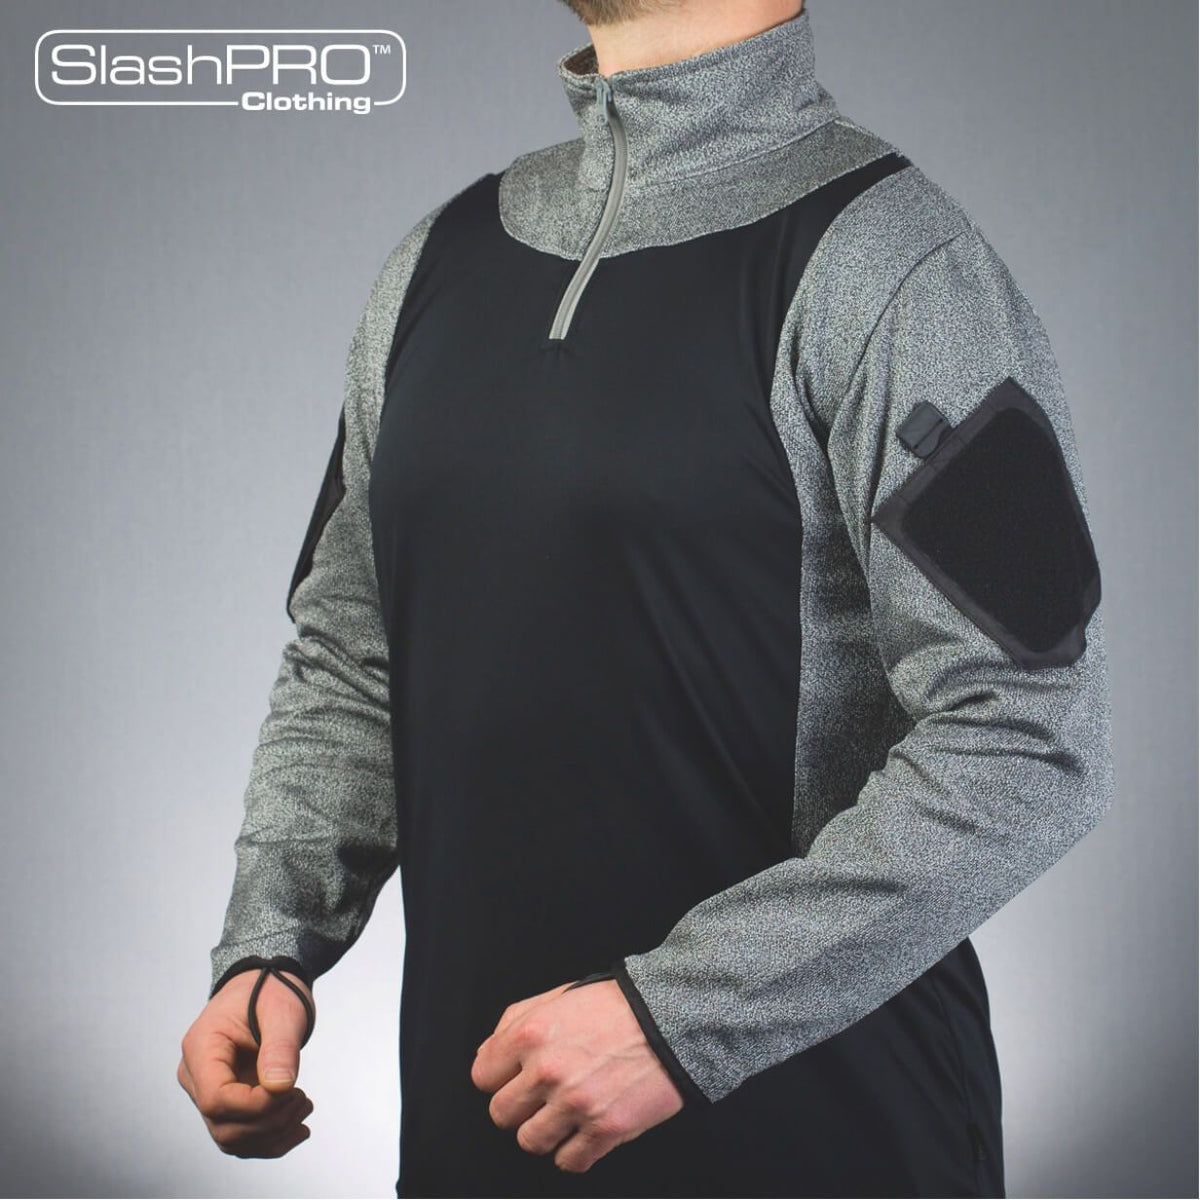 SlashPRO Slash Resistant UBAC Shirt Base Layers SlashPRO Small Tactical Gear Supplier Tactical Distributors Australia